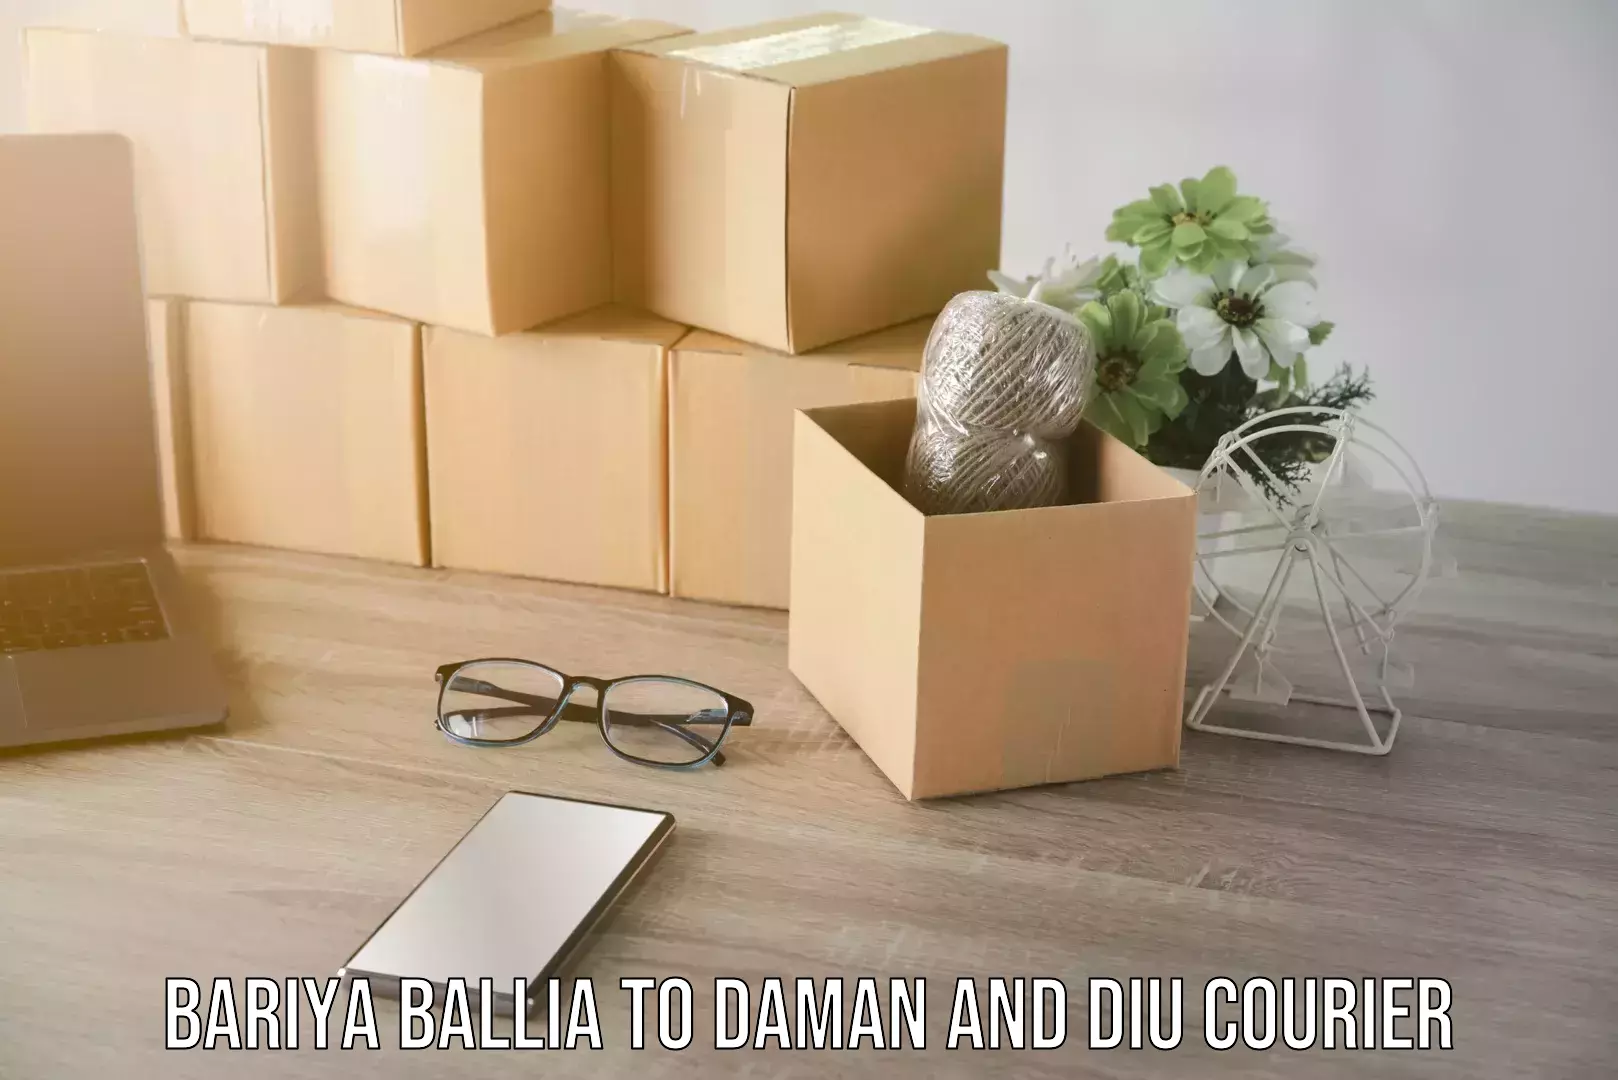 Courier service innovation Bariya Ballia to Diu